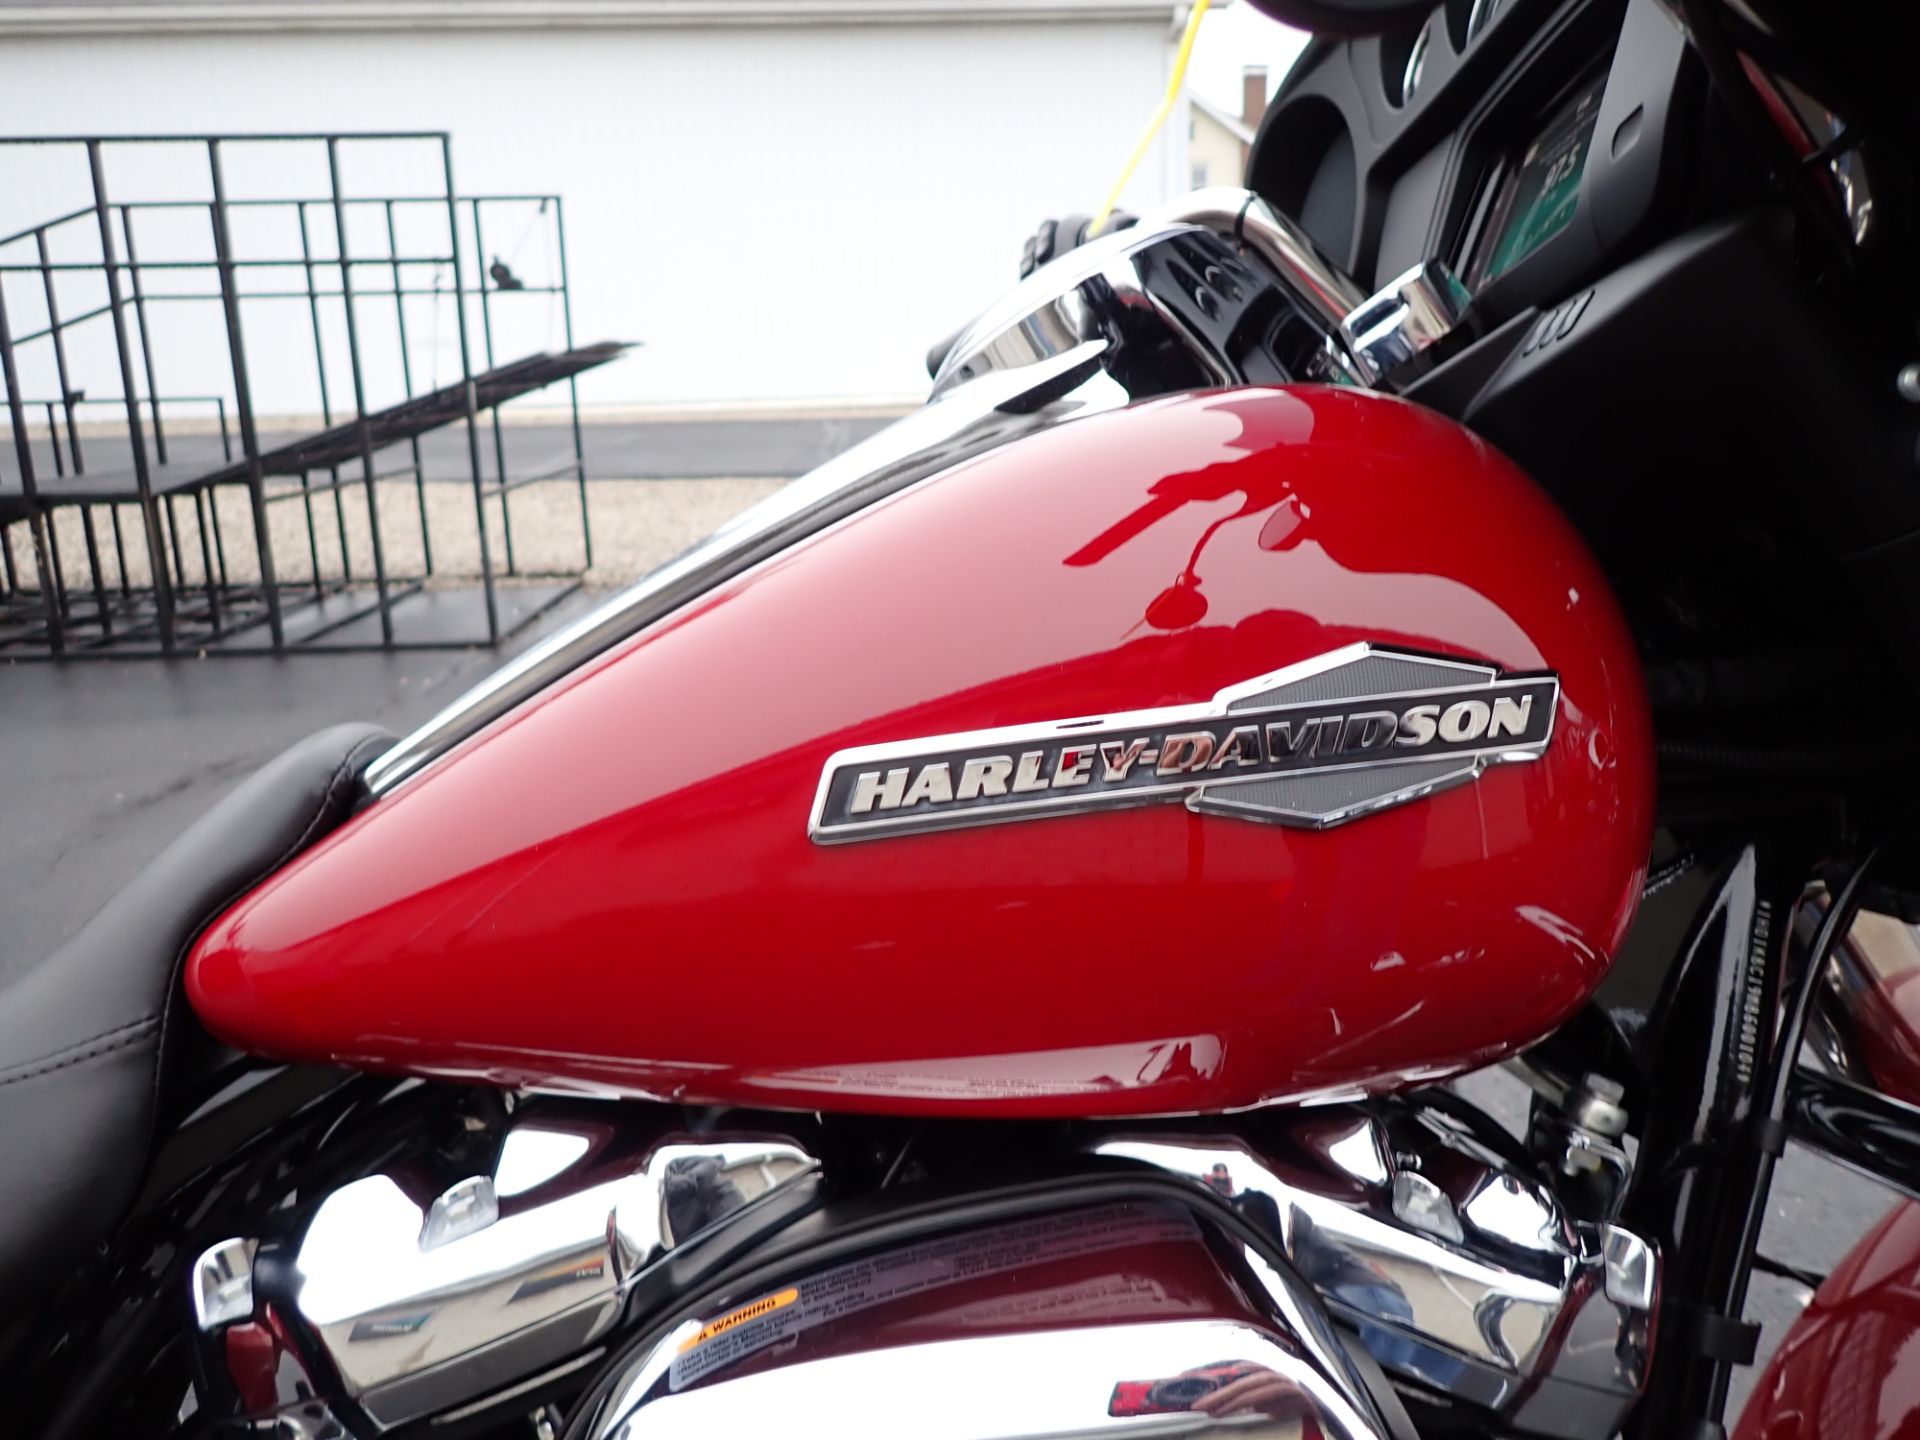 2021 Harley-Davidson Street Glide® in Massillon, Ohio - Photo 3